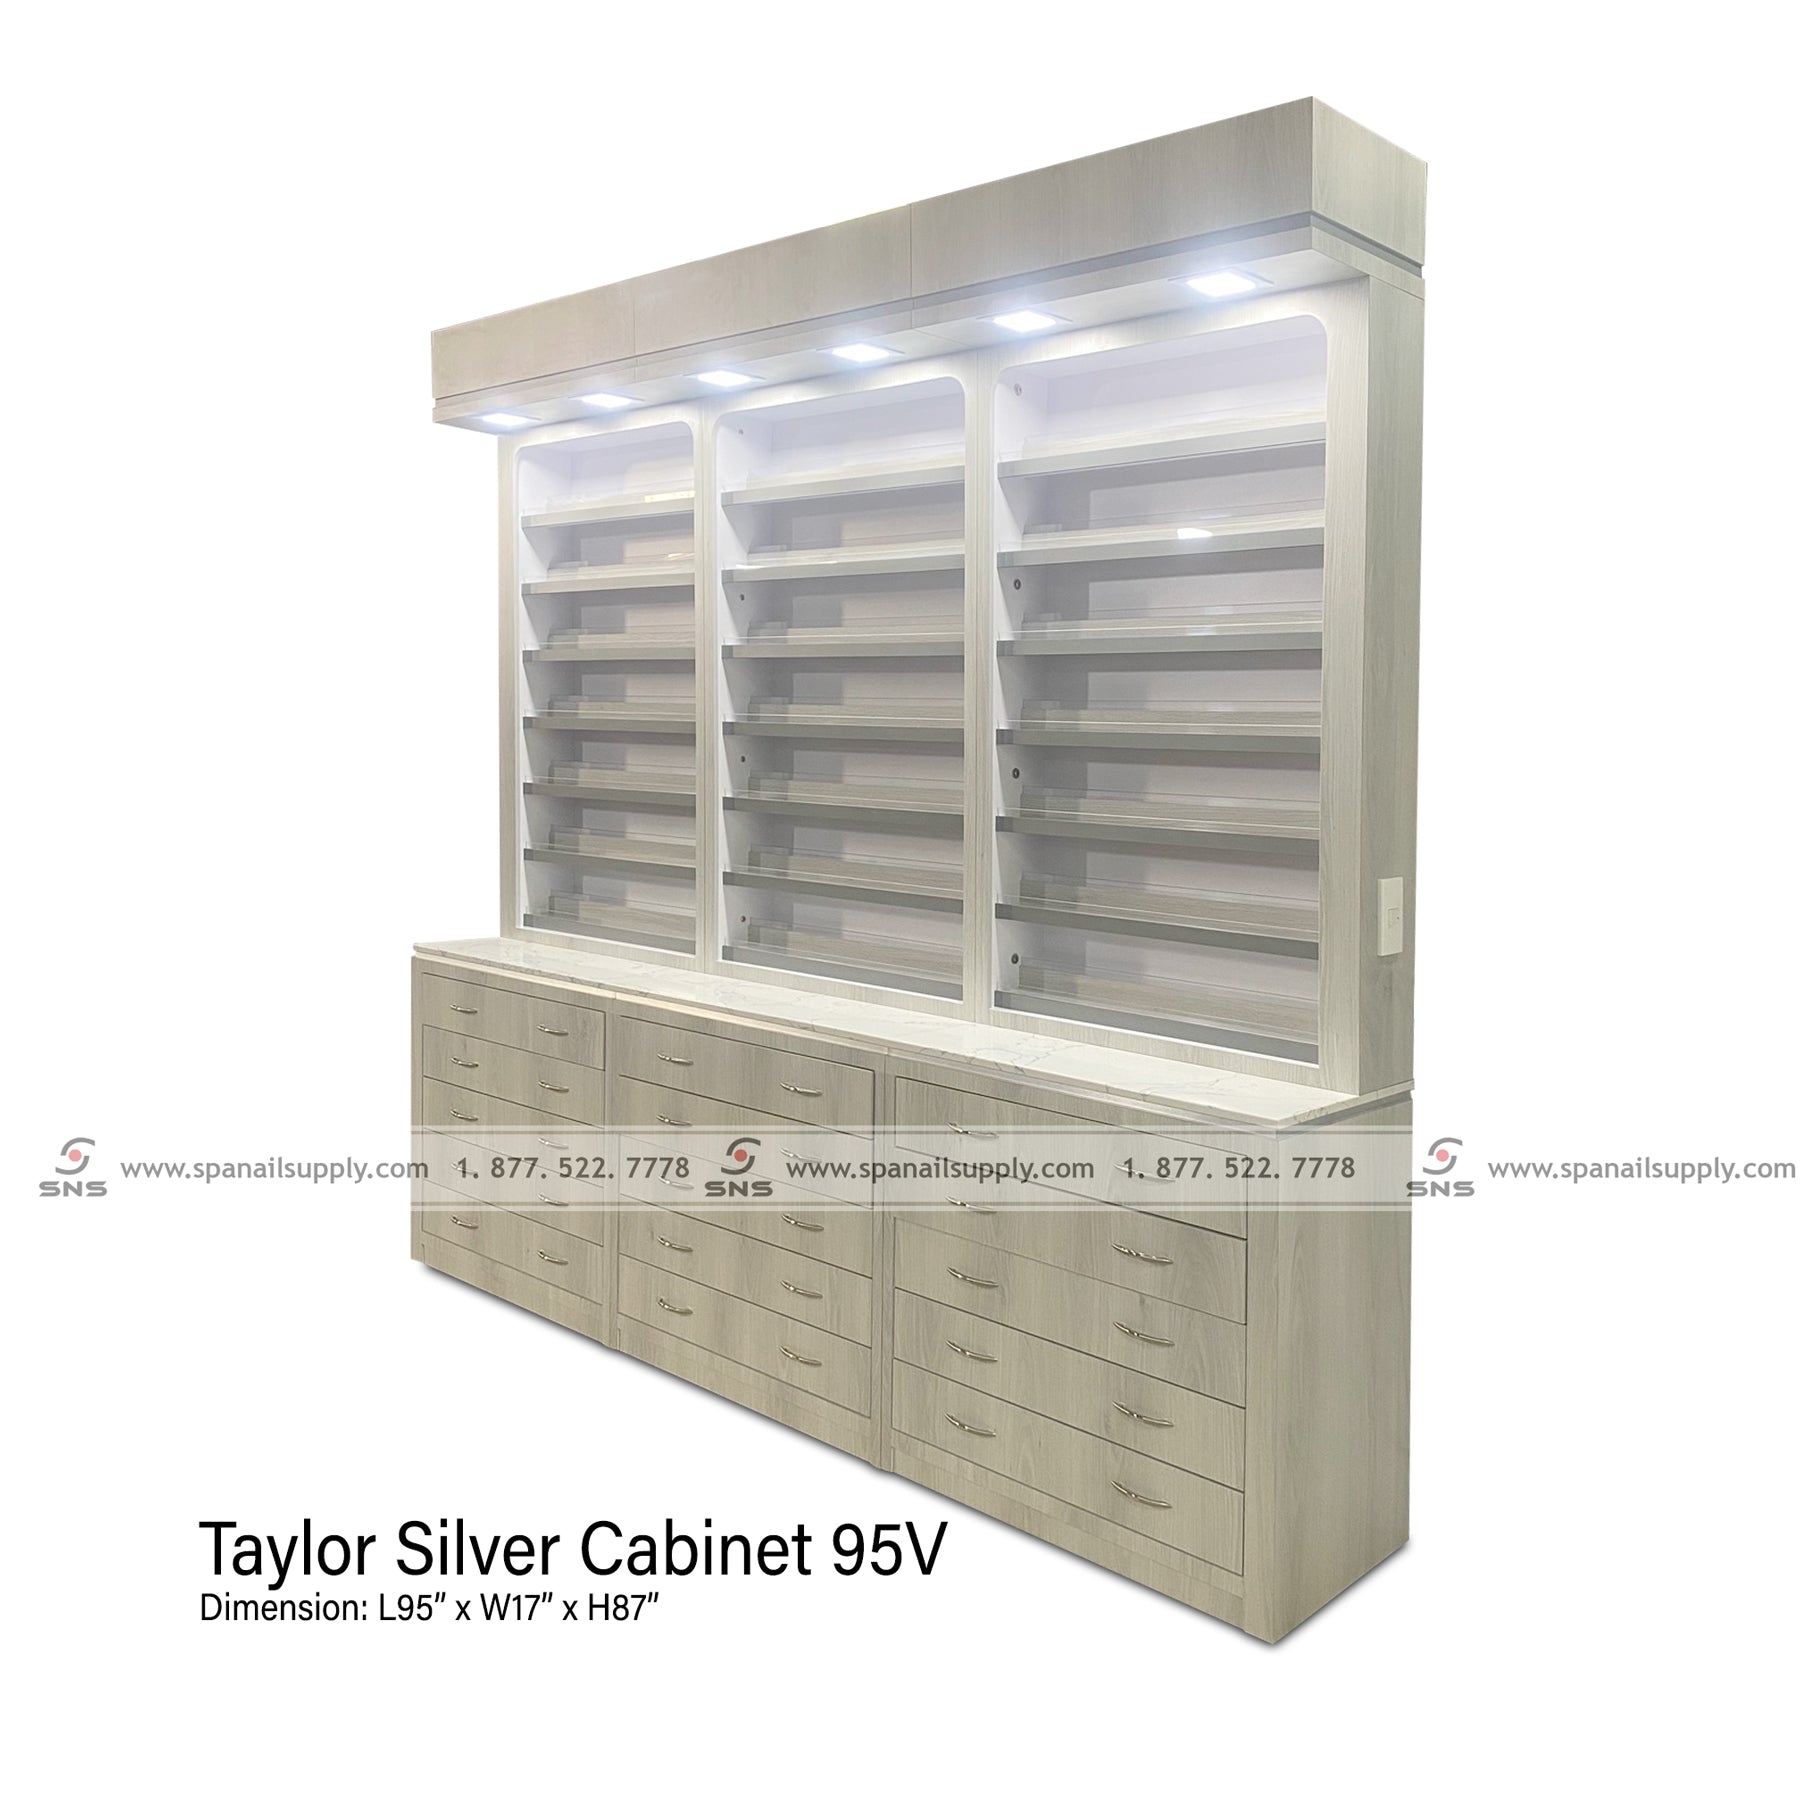 Taylor Silver Cabinet 95V